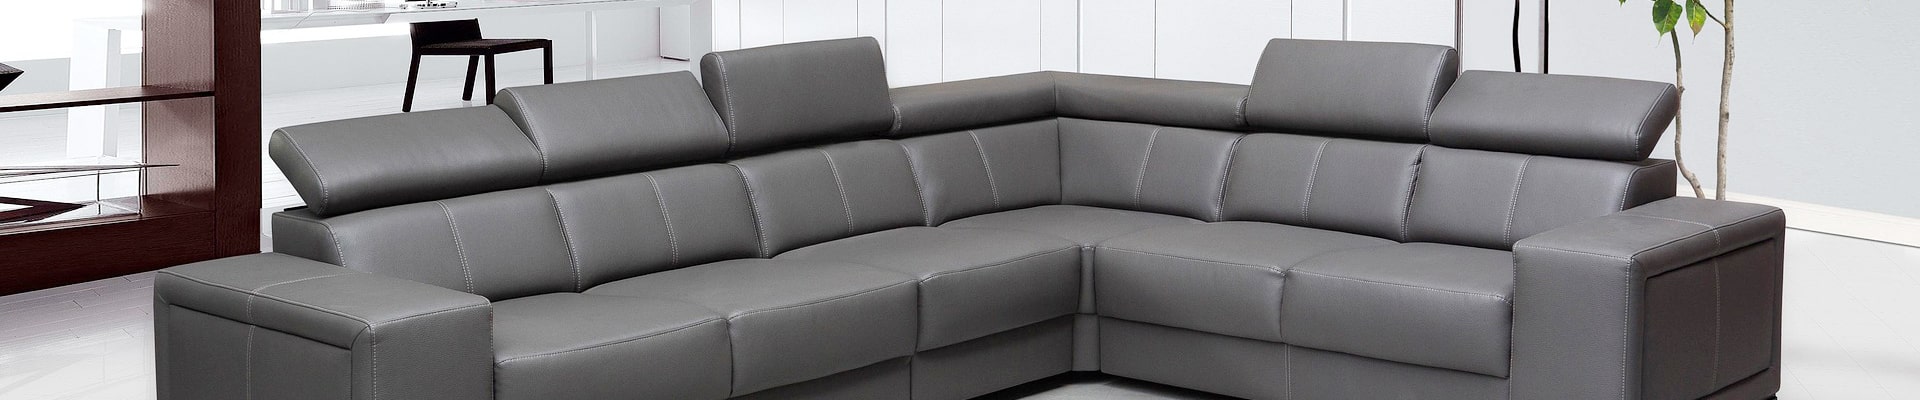 Leatherette Sofa Sets